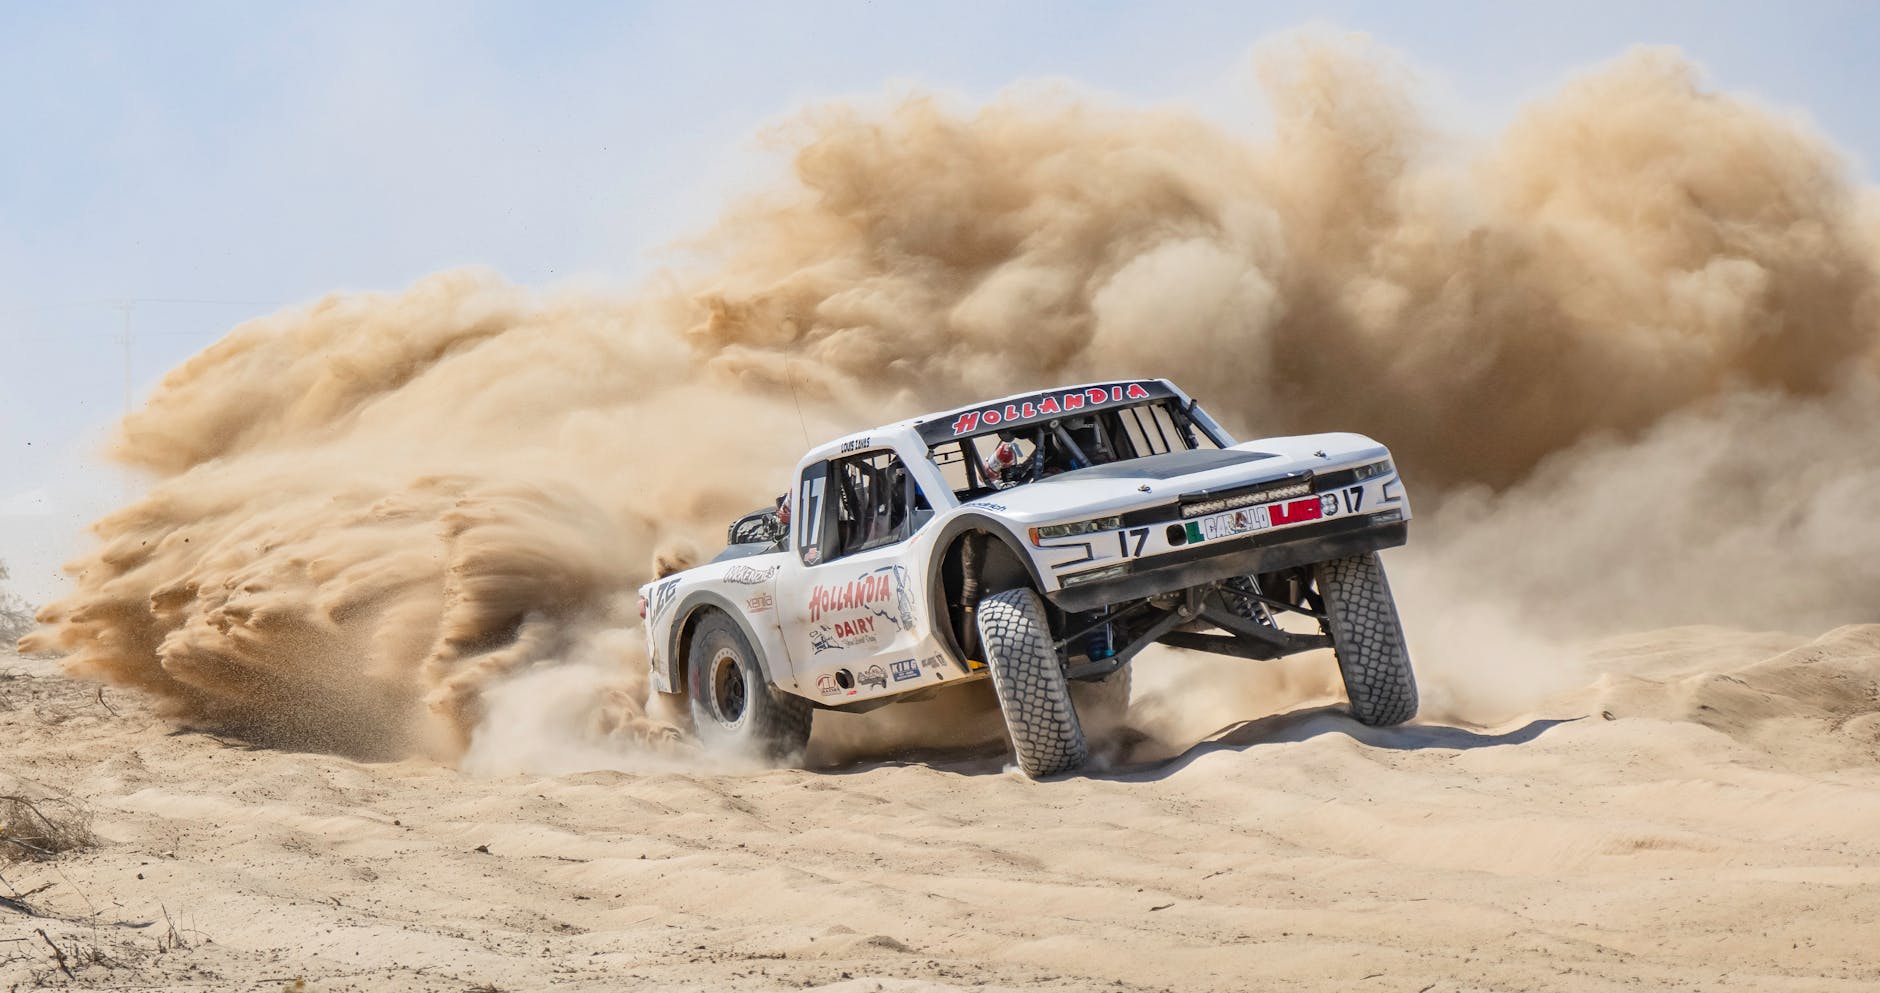 A Baja Truck in a Desert ARace